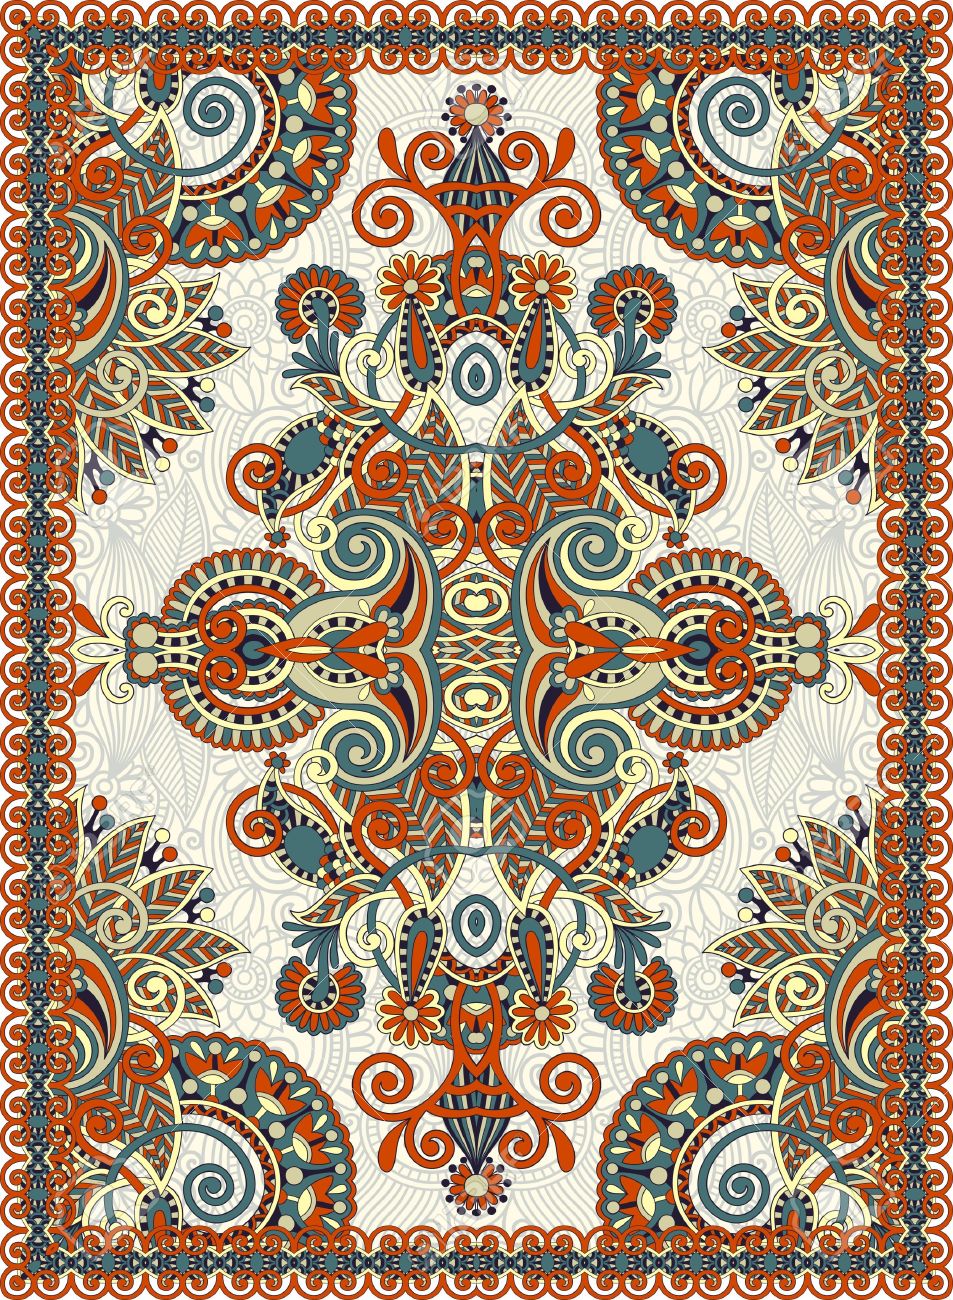 Marvelous carpet design